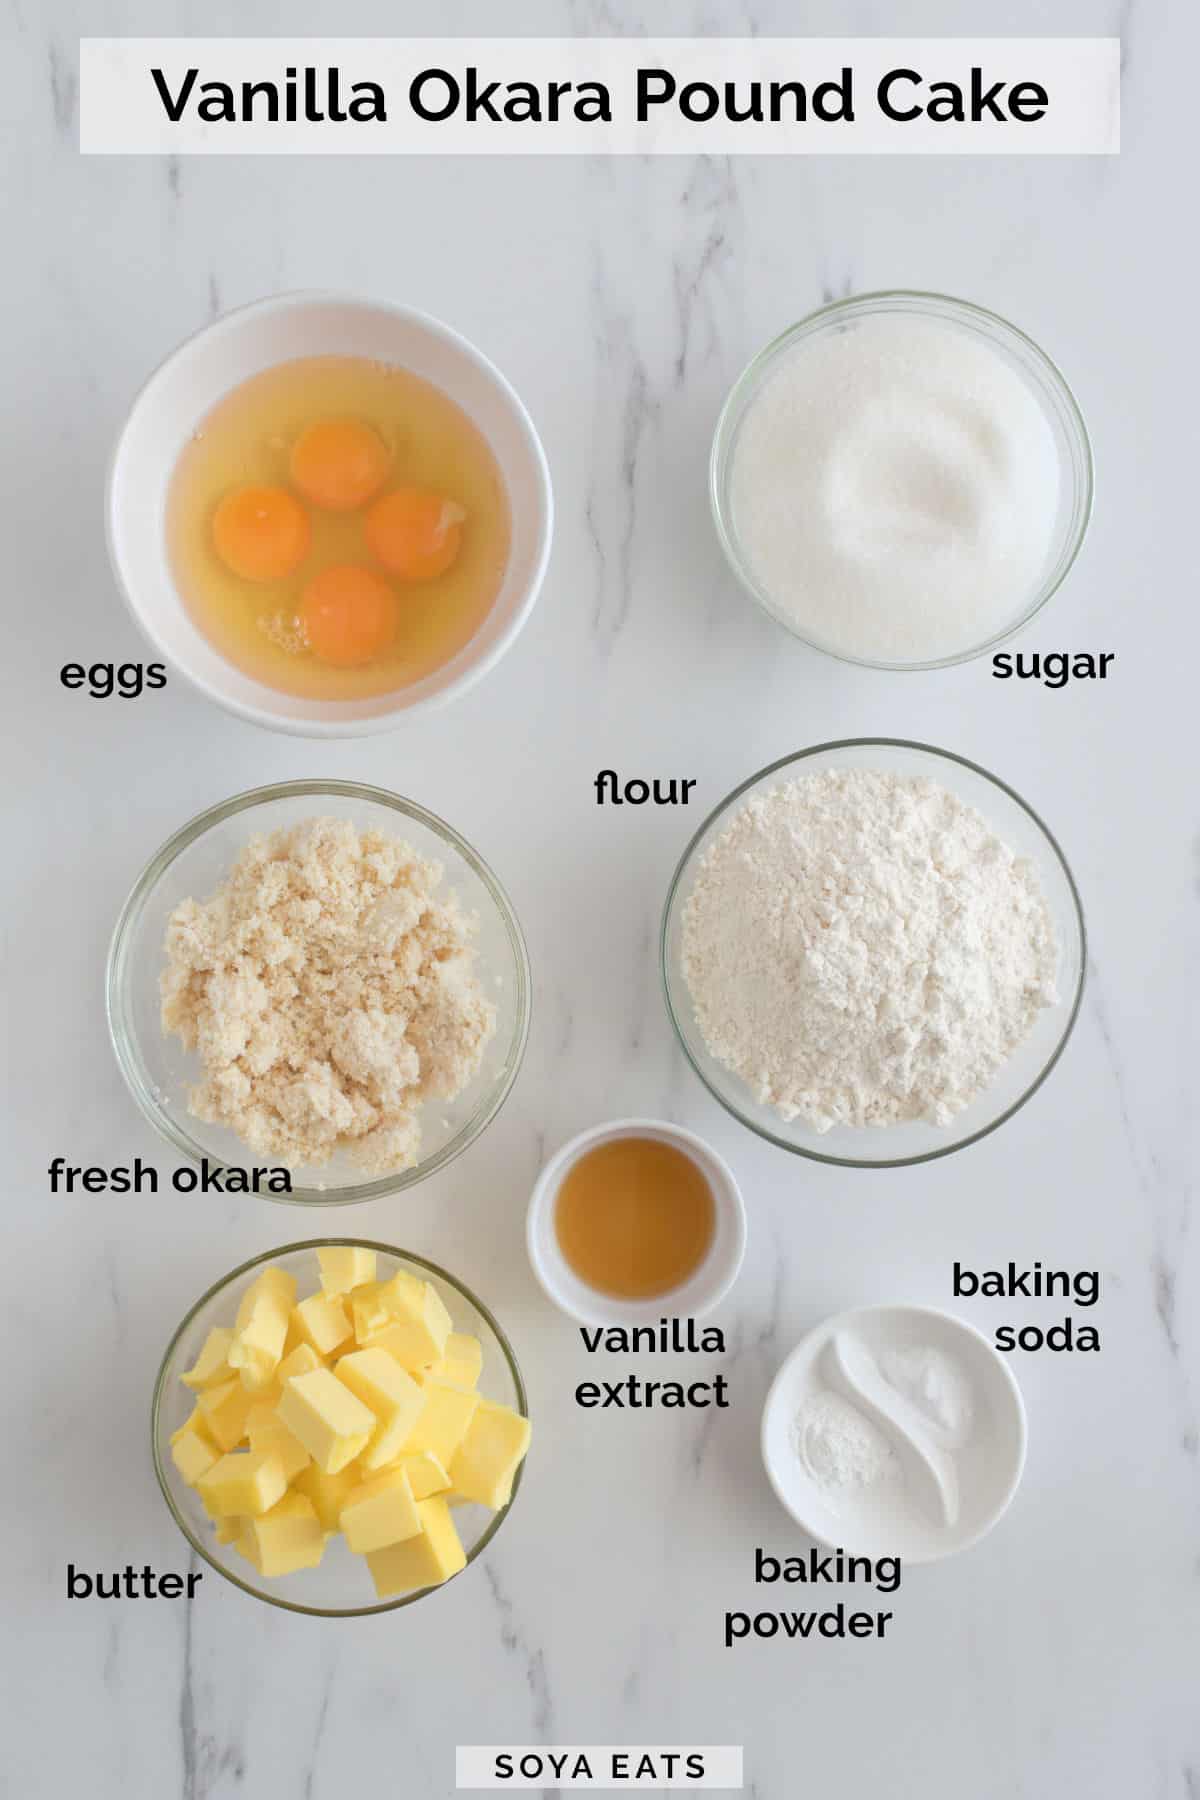 An image showing what you need to make a vanilla okara pound cake.